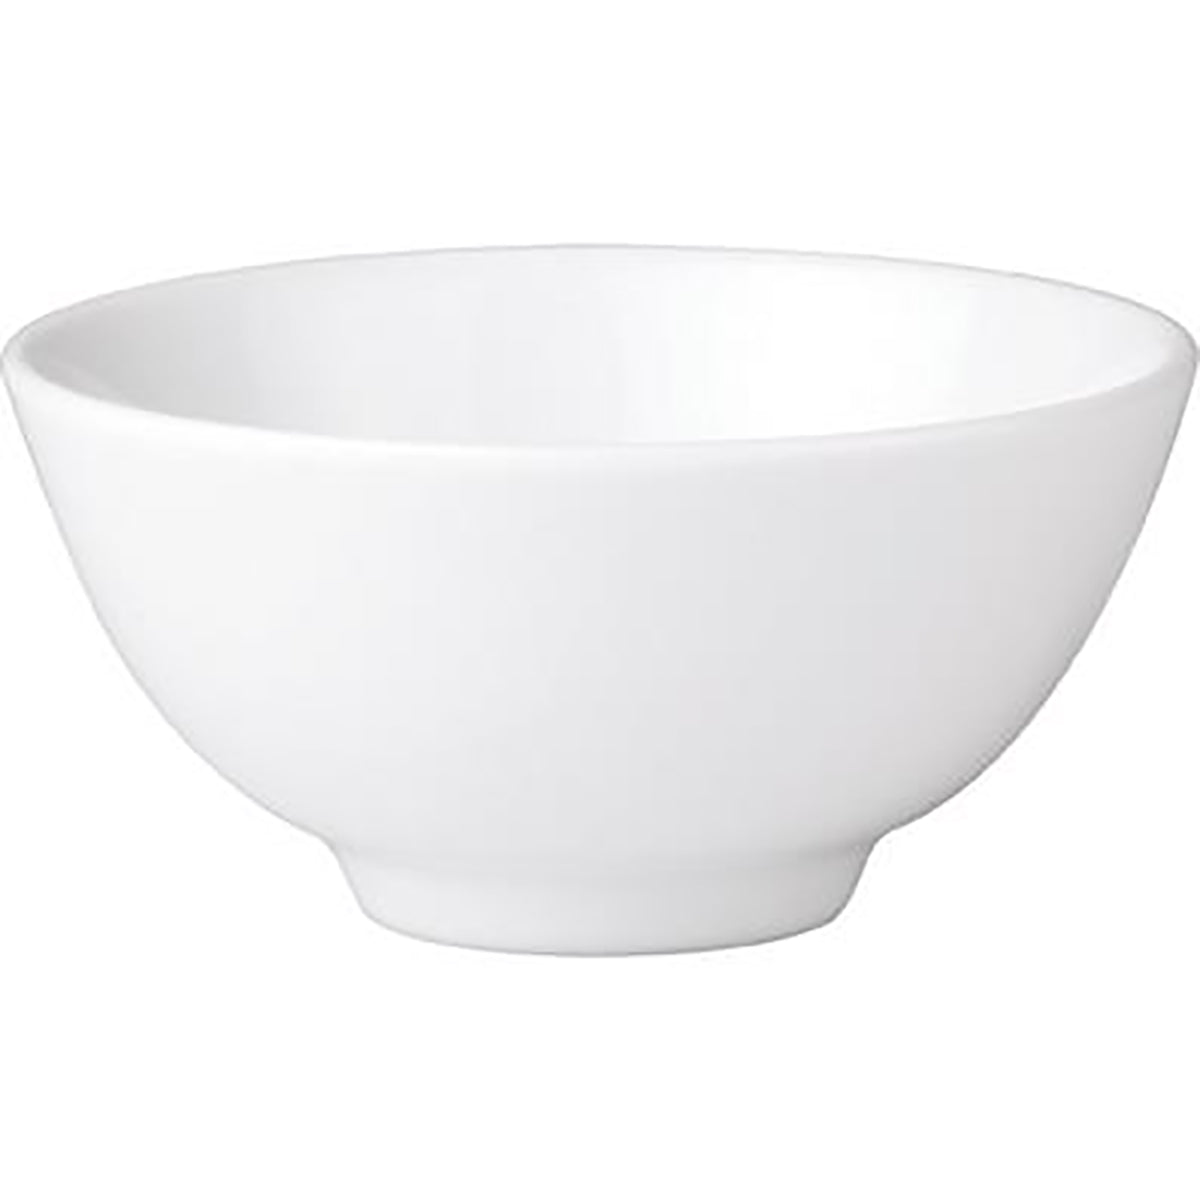 94133 Royal Porcelain Chelsea Rice/Noodle Bowl 125mm (4019) Tomkin Australia Hospitality Supplies